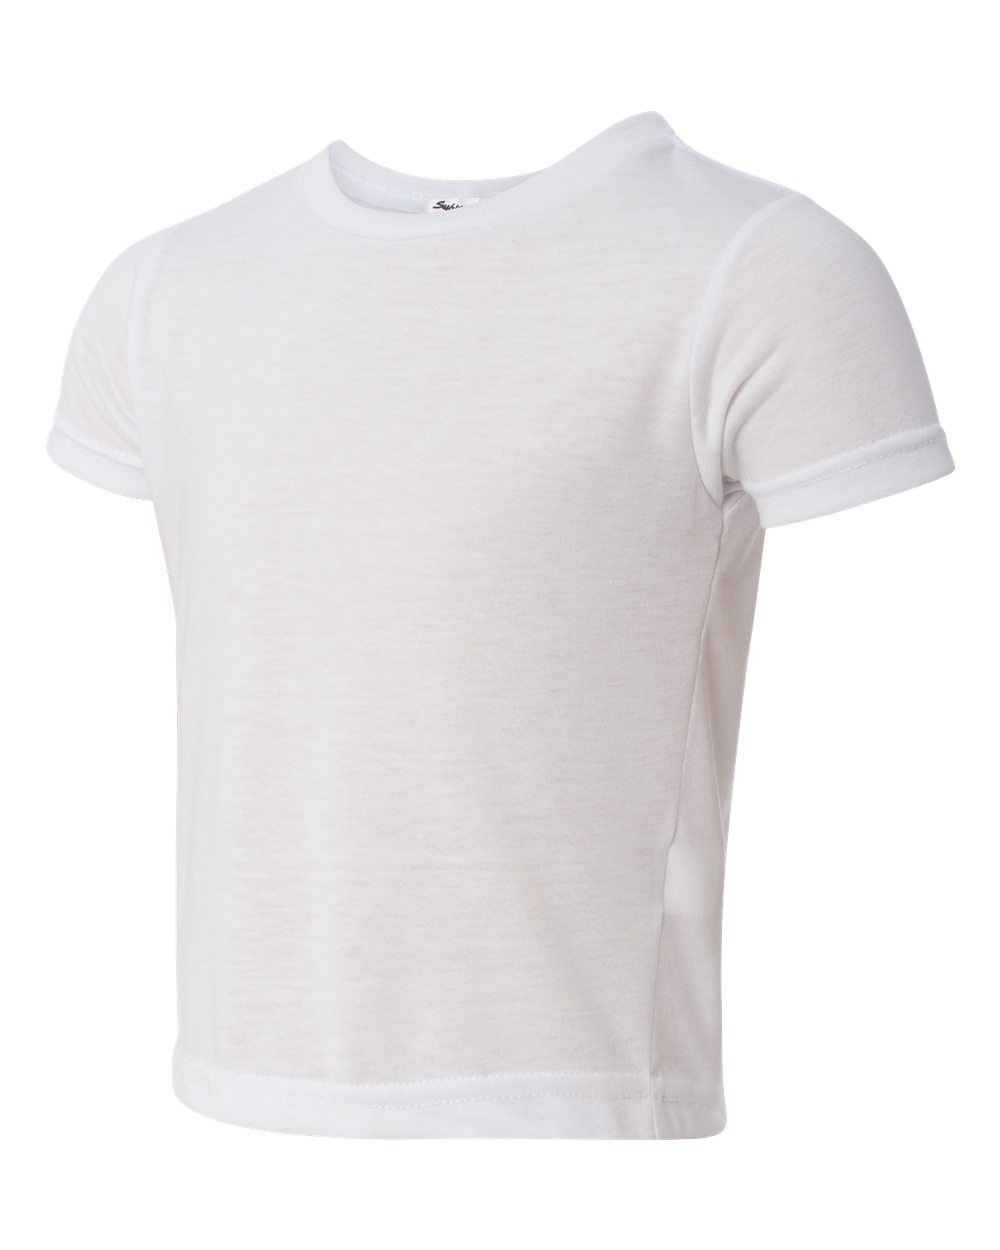 SubliVie 1310-Toddler Polyester T-Shirt